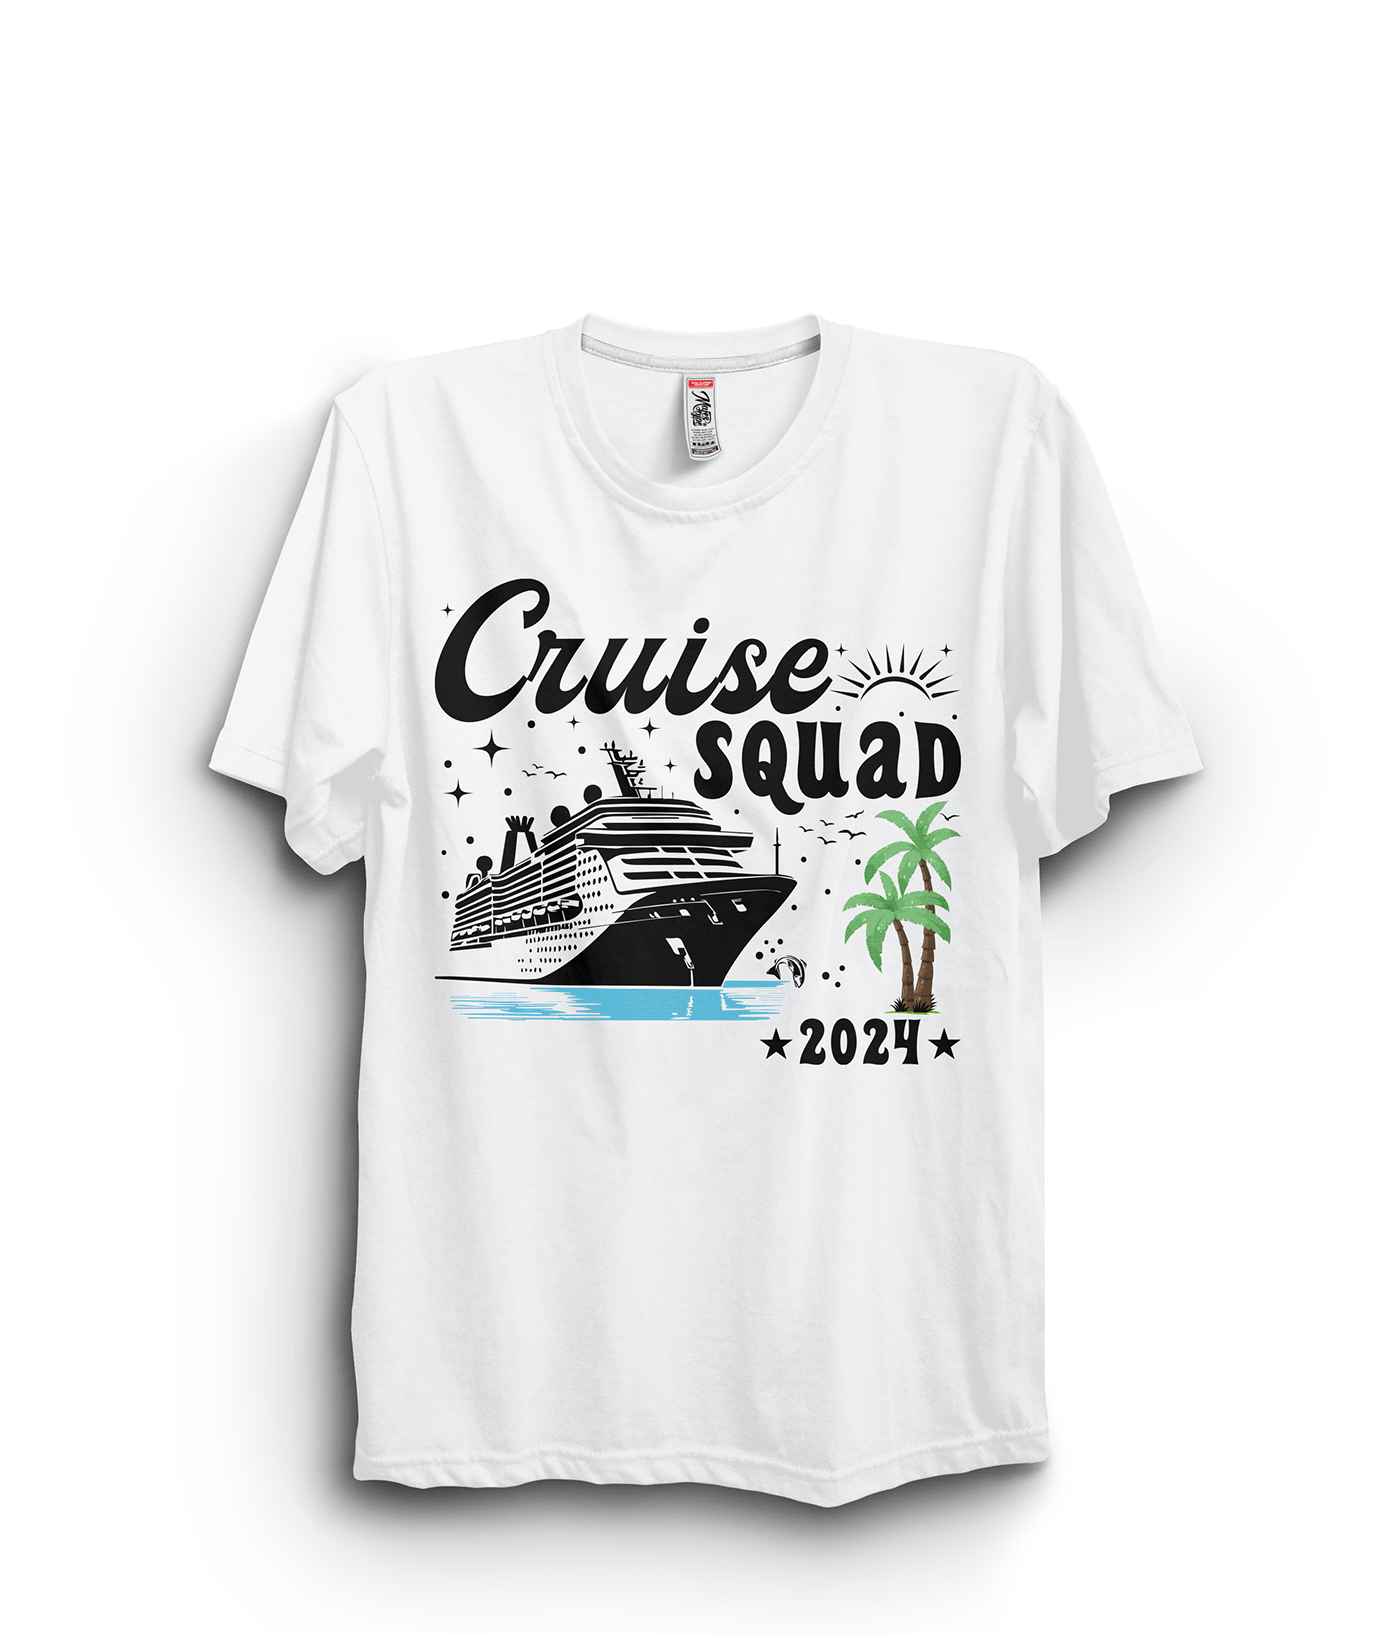 t-shirt Tshirt Design 𝖠𝖽𝗈𝖻𝖾 𝖨𝗅𝗅𝗎𝗌𝗍𝗋𝖺𝗍𝗈𝗋 design Custom typography   teespring merch by amazon custom tshirt design MarchByAmazon